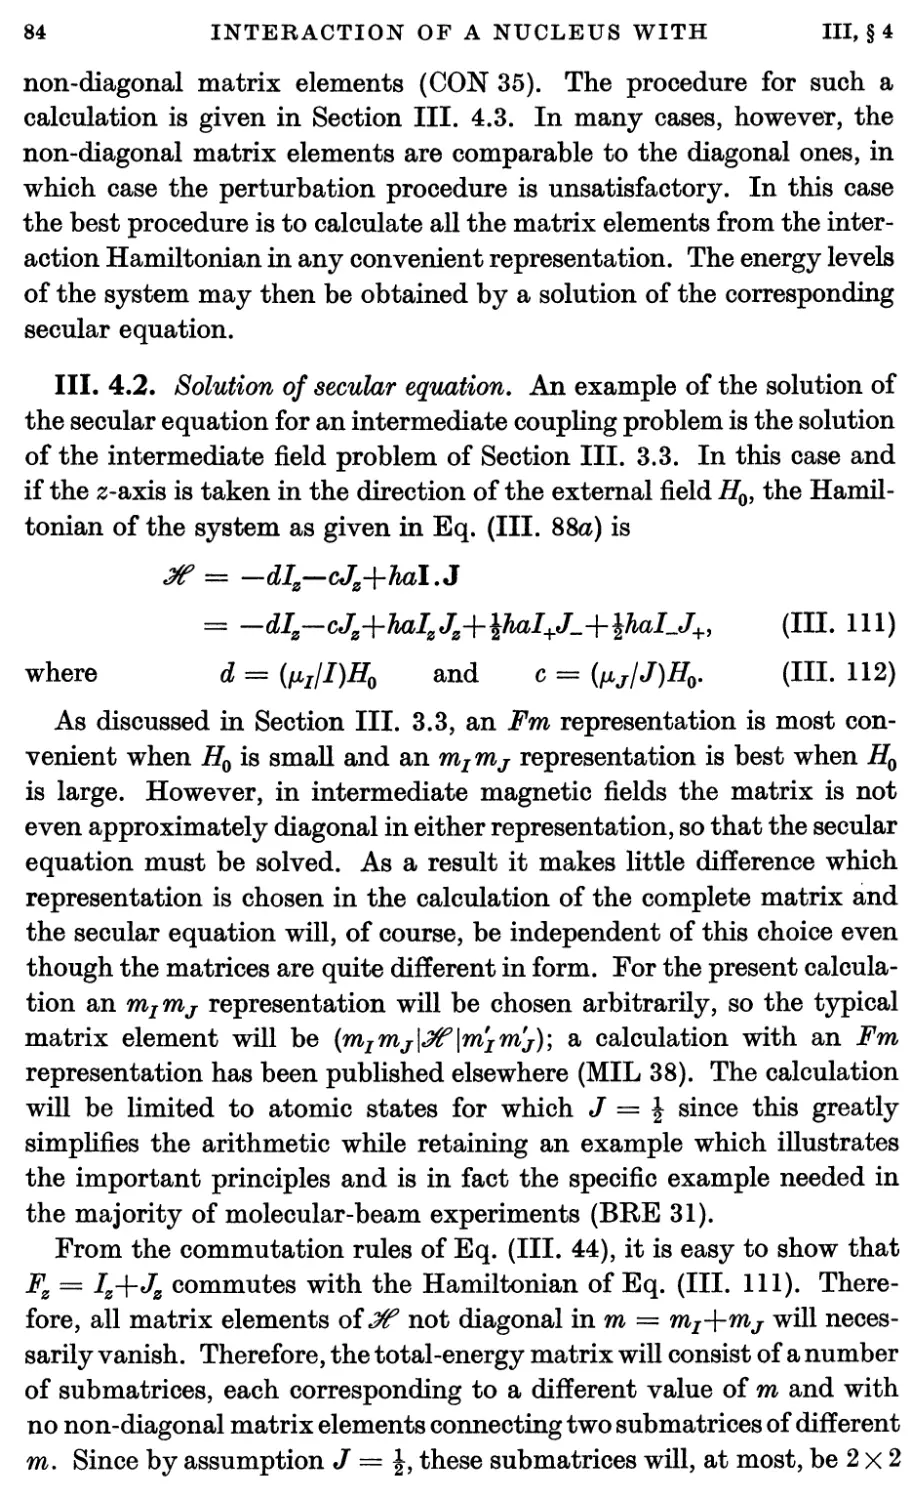 III.4.2. Solution of secular equation